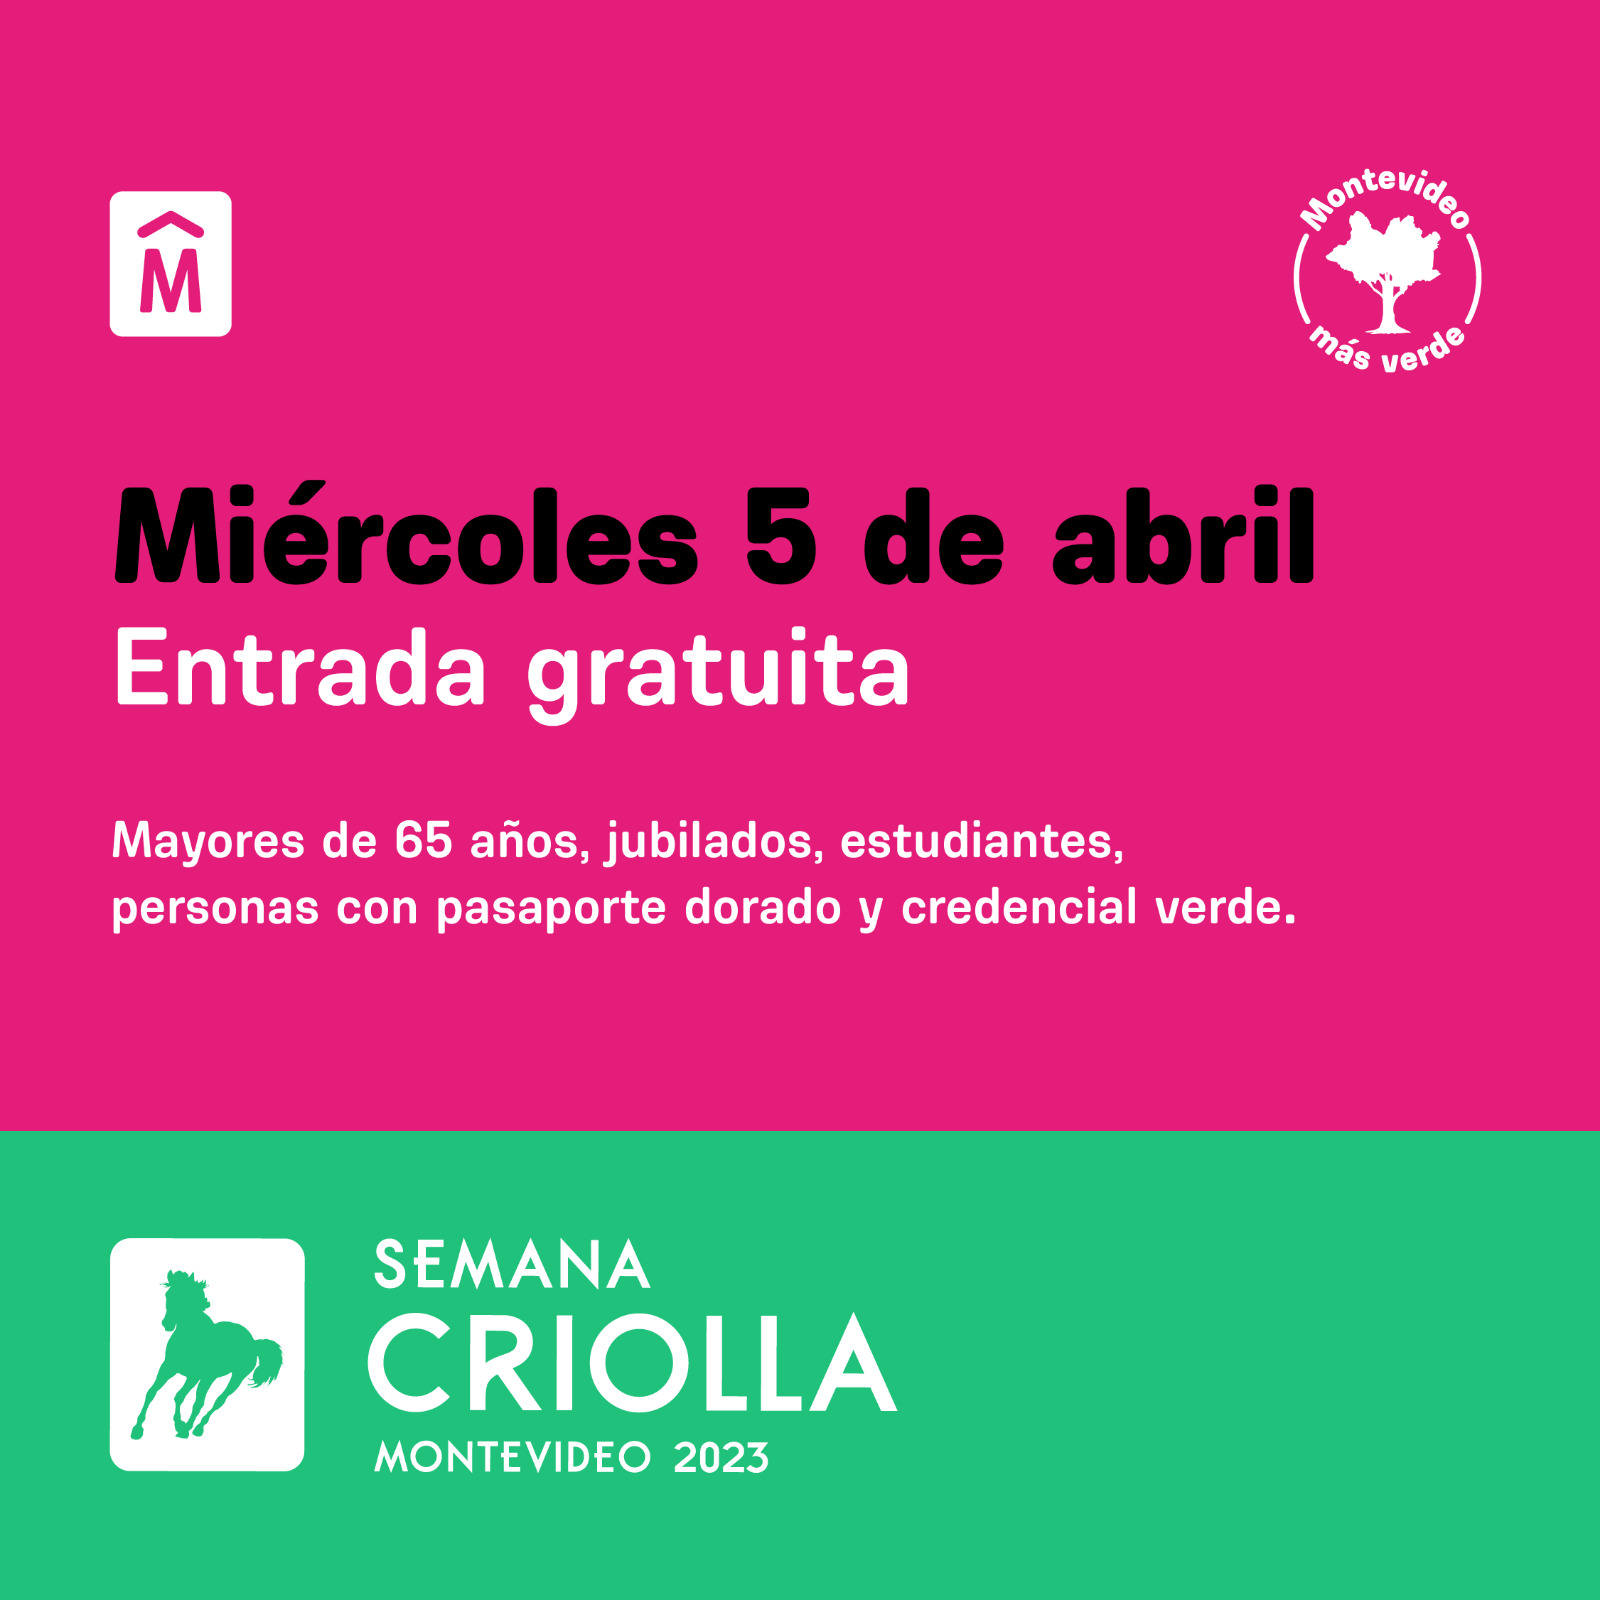 Criolla_estudiantesgratis